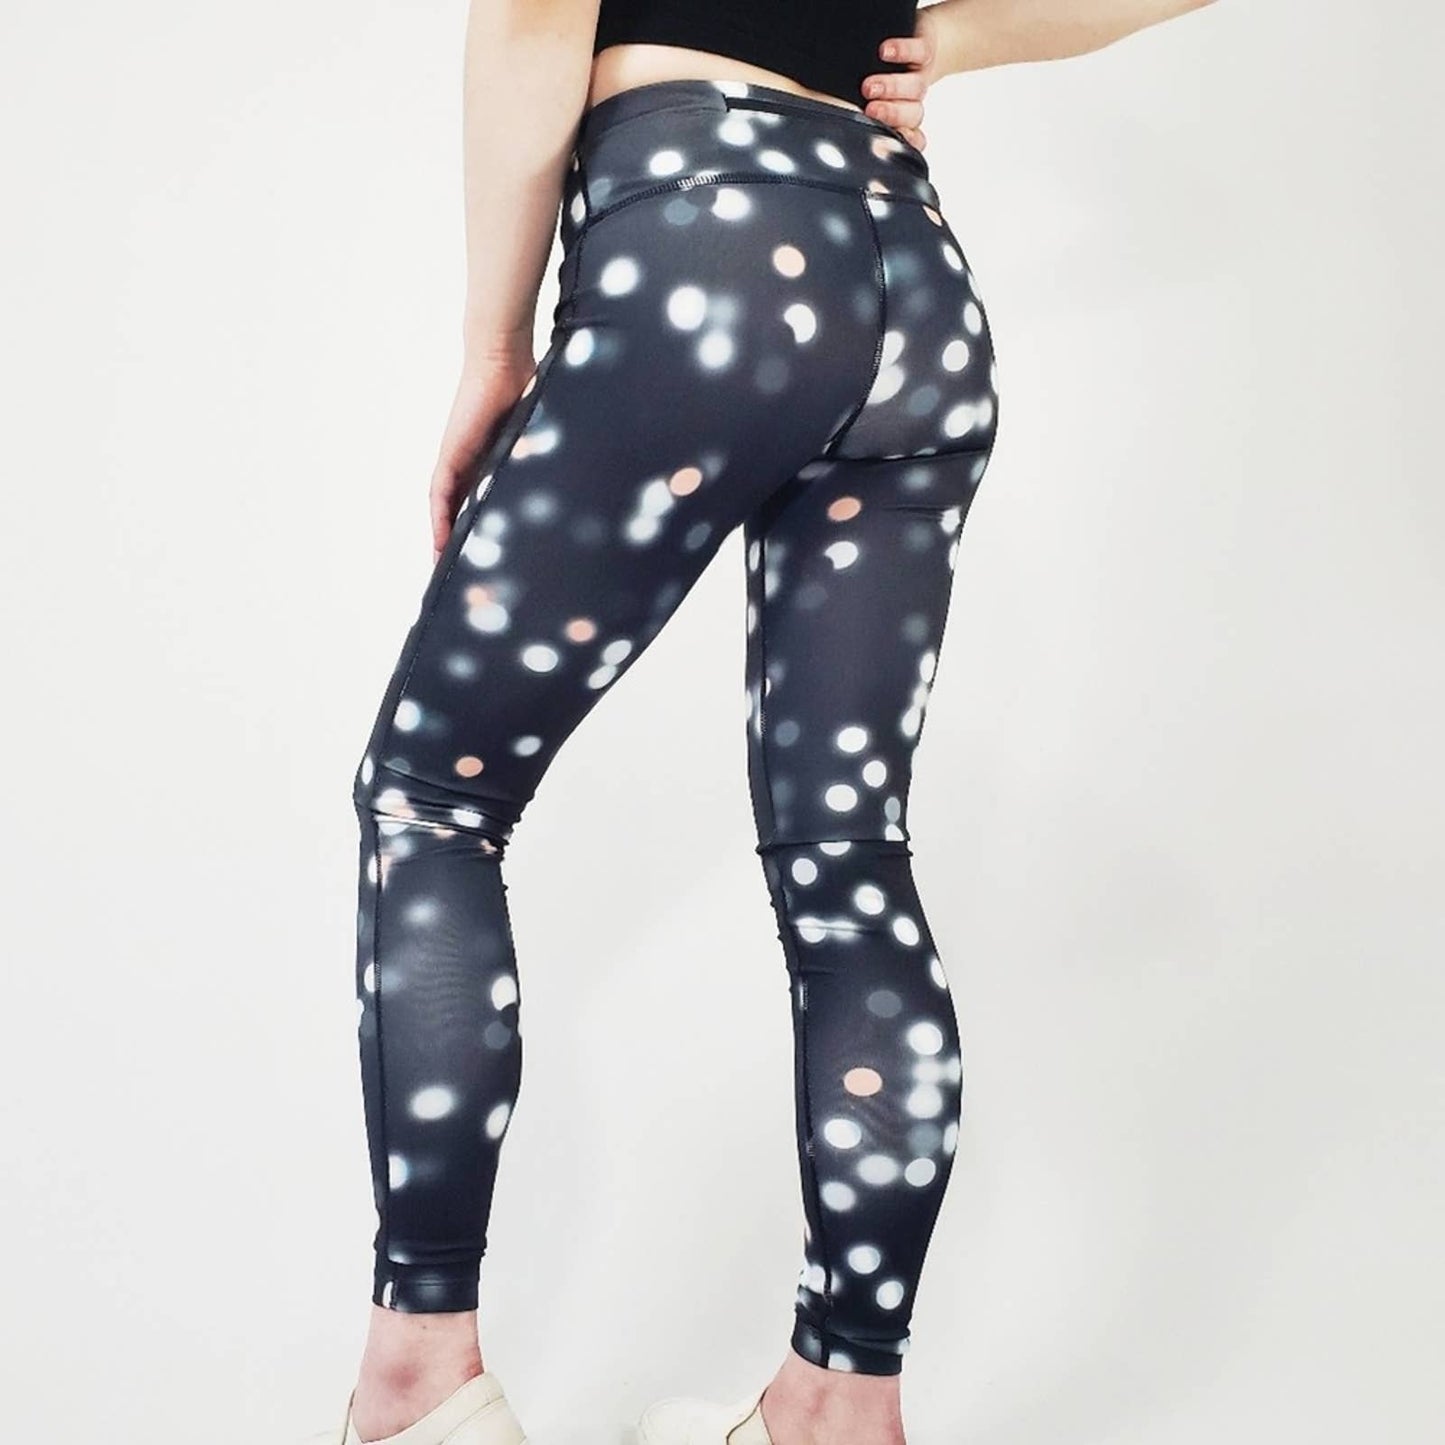 Nike Dri-Fit Essentials Printed Polka Dot Legging Tights Yoga Pants - XS